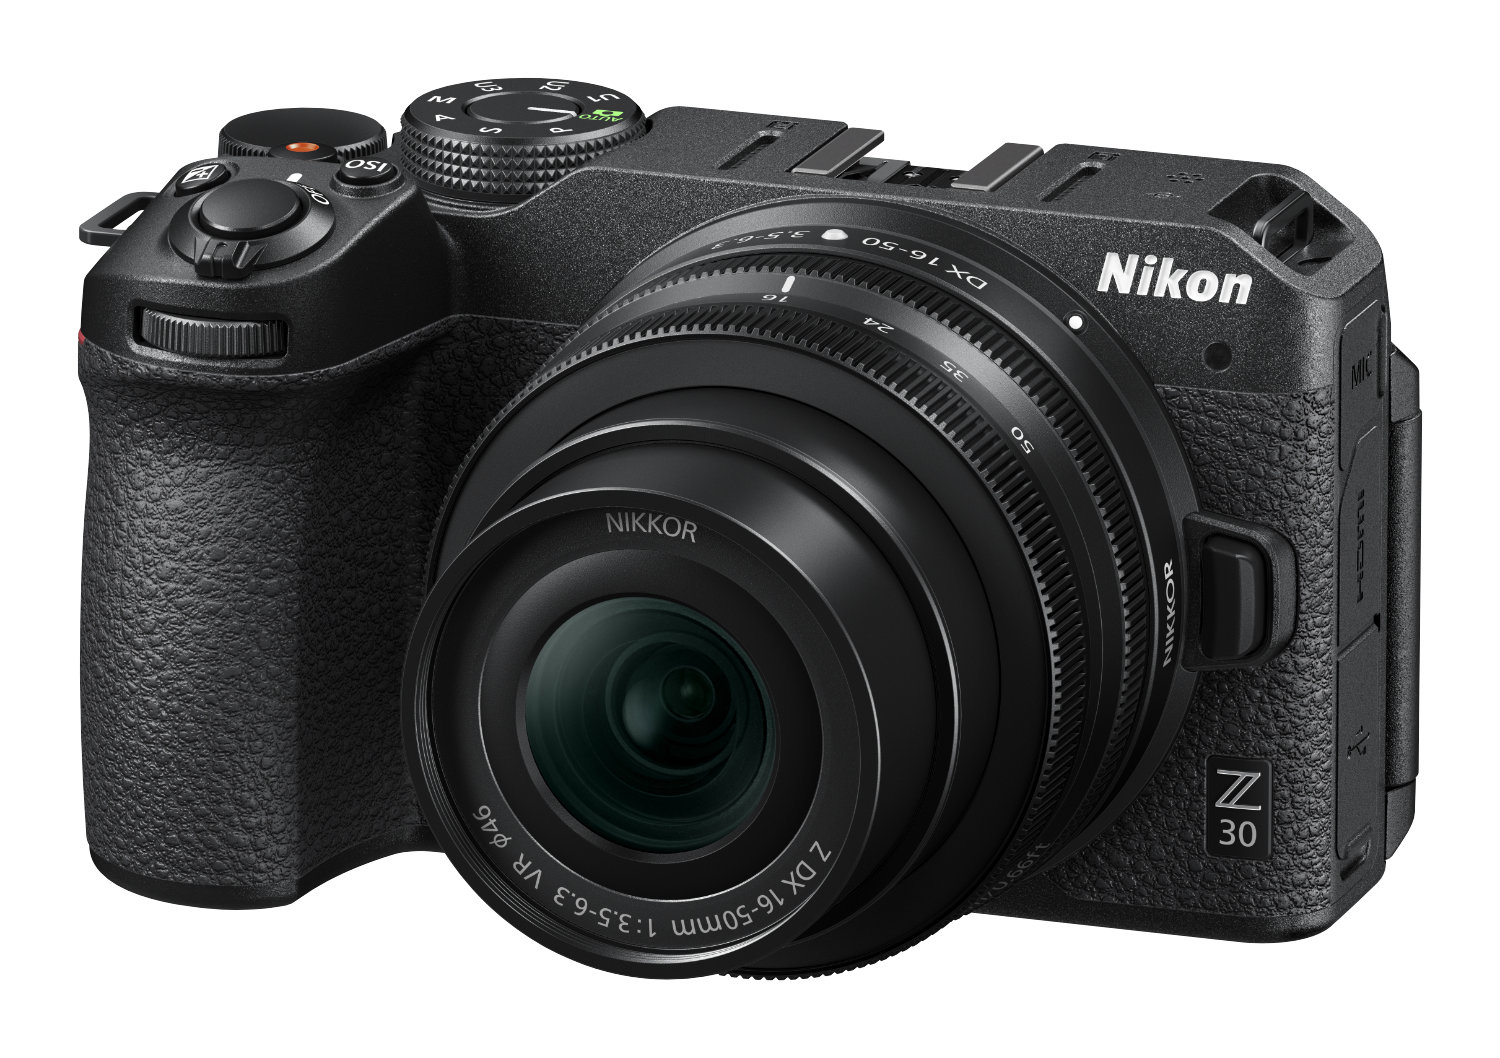 Nikon Z 30: Compact 4Kp30 APS-C camera for vlogging